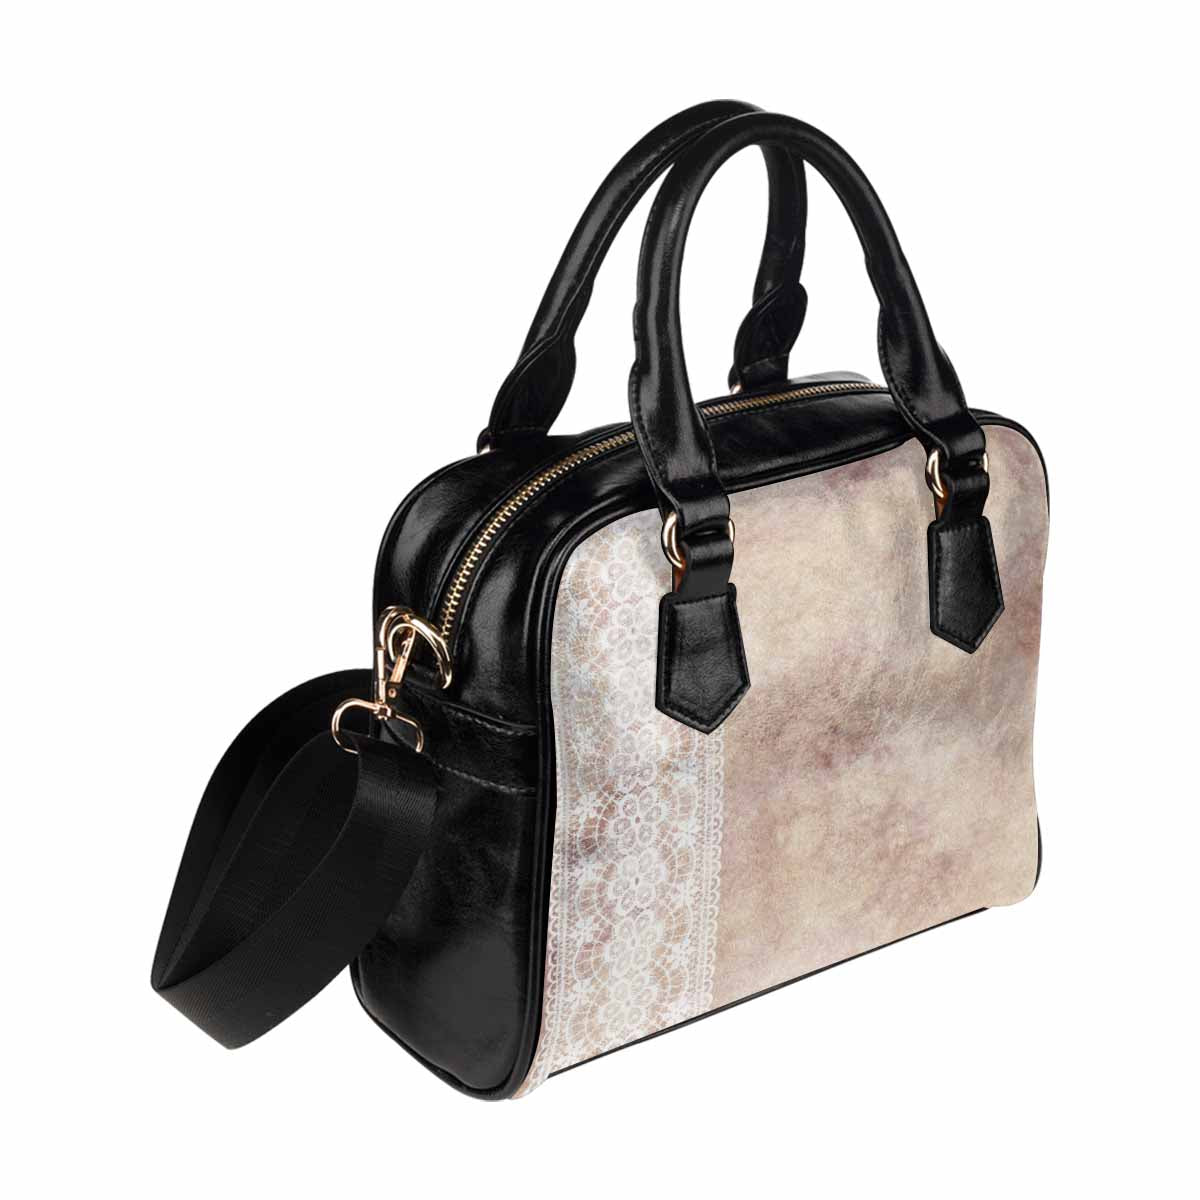 Victorian lace print, cute handbag, Mod 19163453, design 35